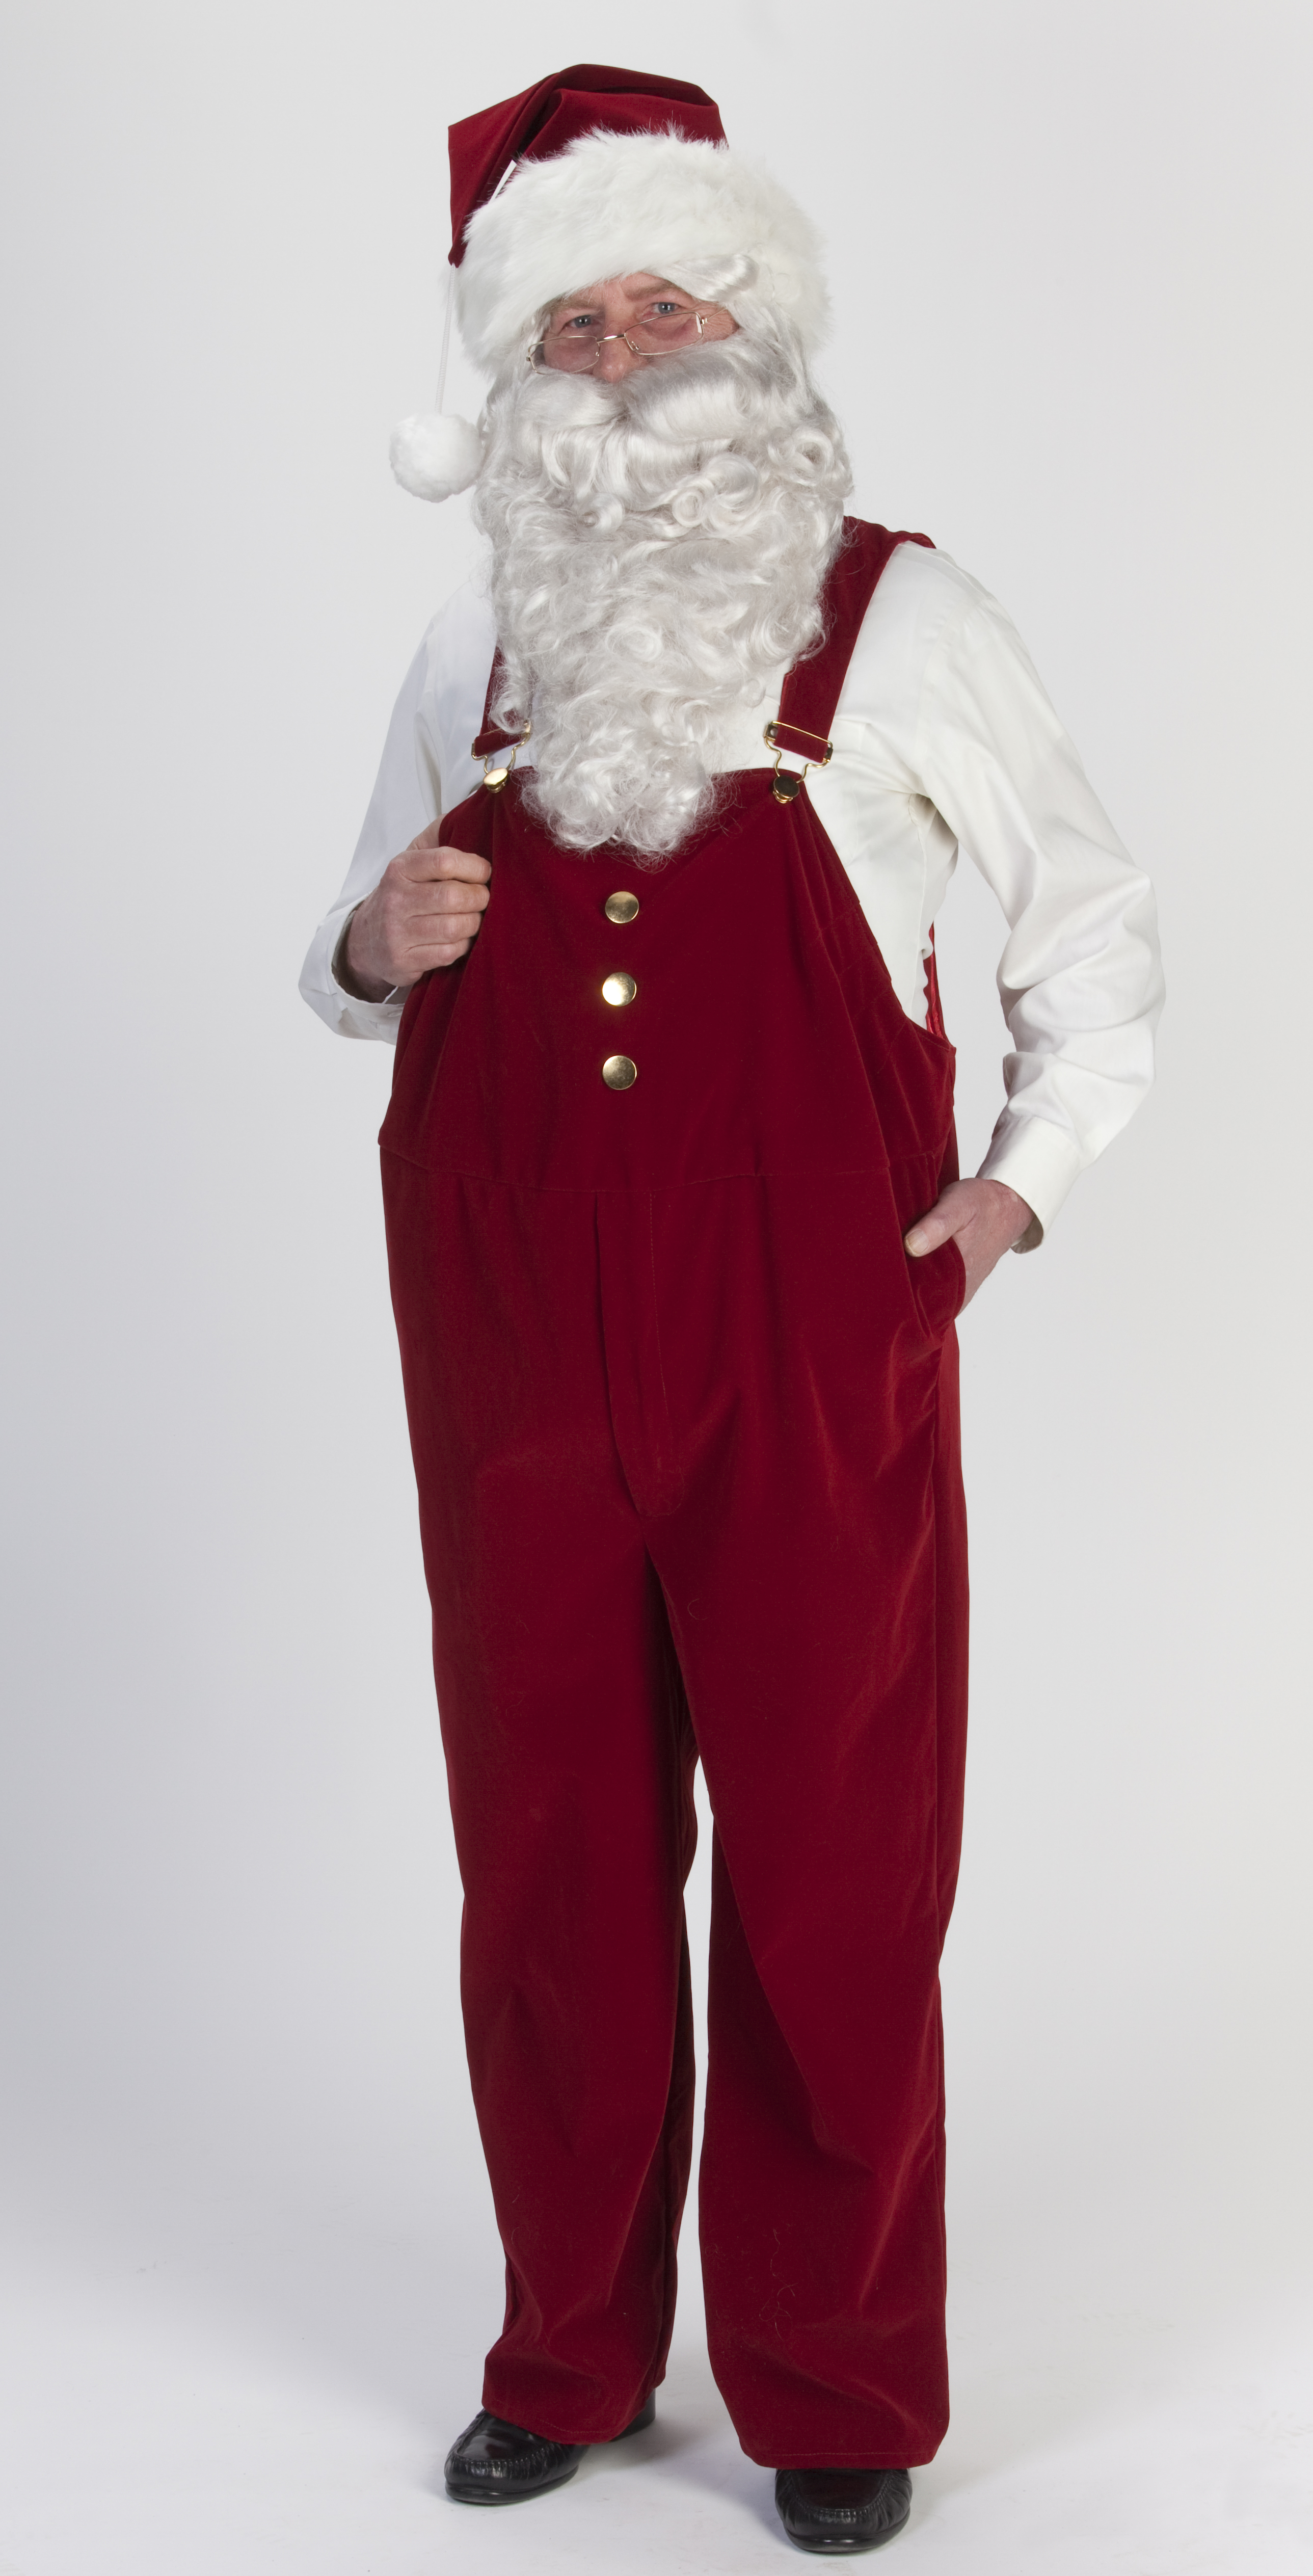 The Costume Center 7-piece Burgundy Velvet Overall Santa Claus Christmas Suit - Adult Size XXXL